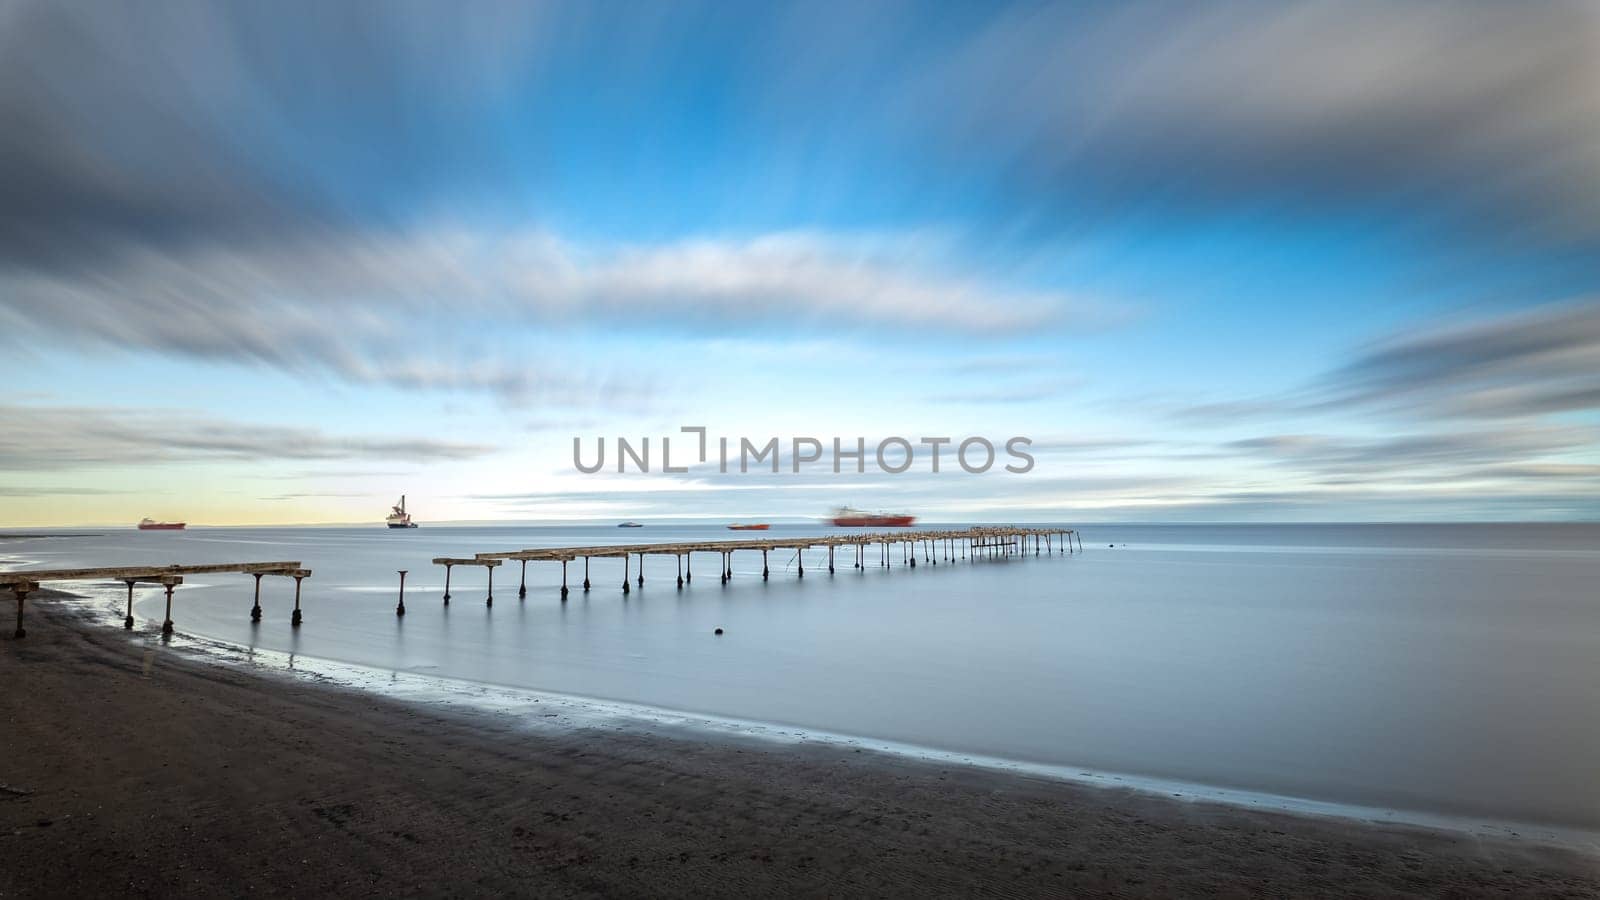 Serene seascape with long pier under a dynamic sky by FerradalFCG